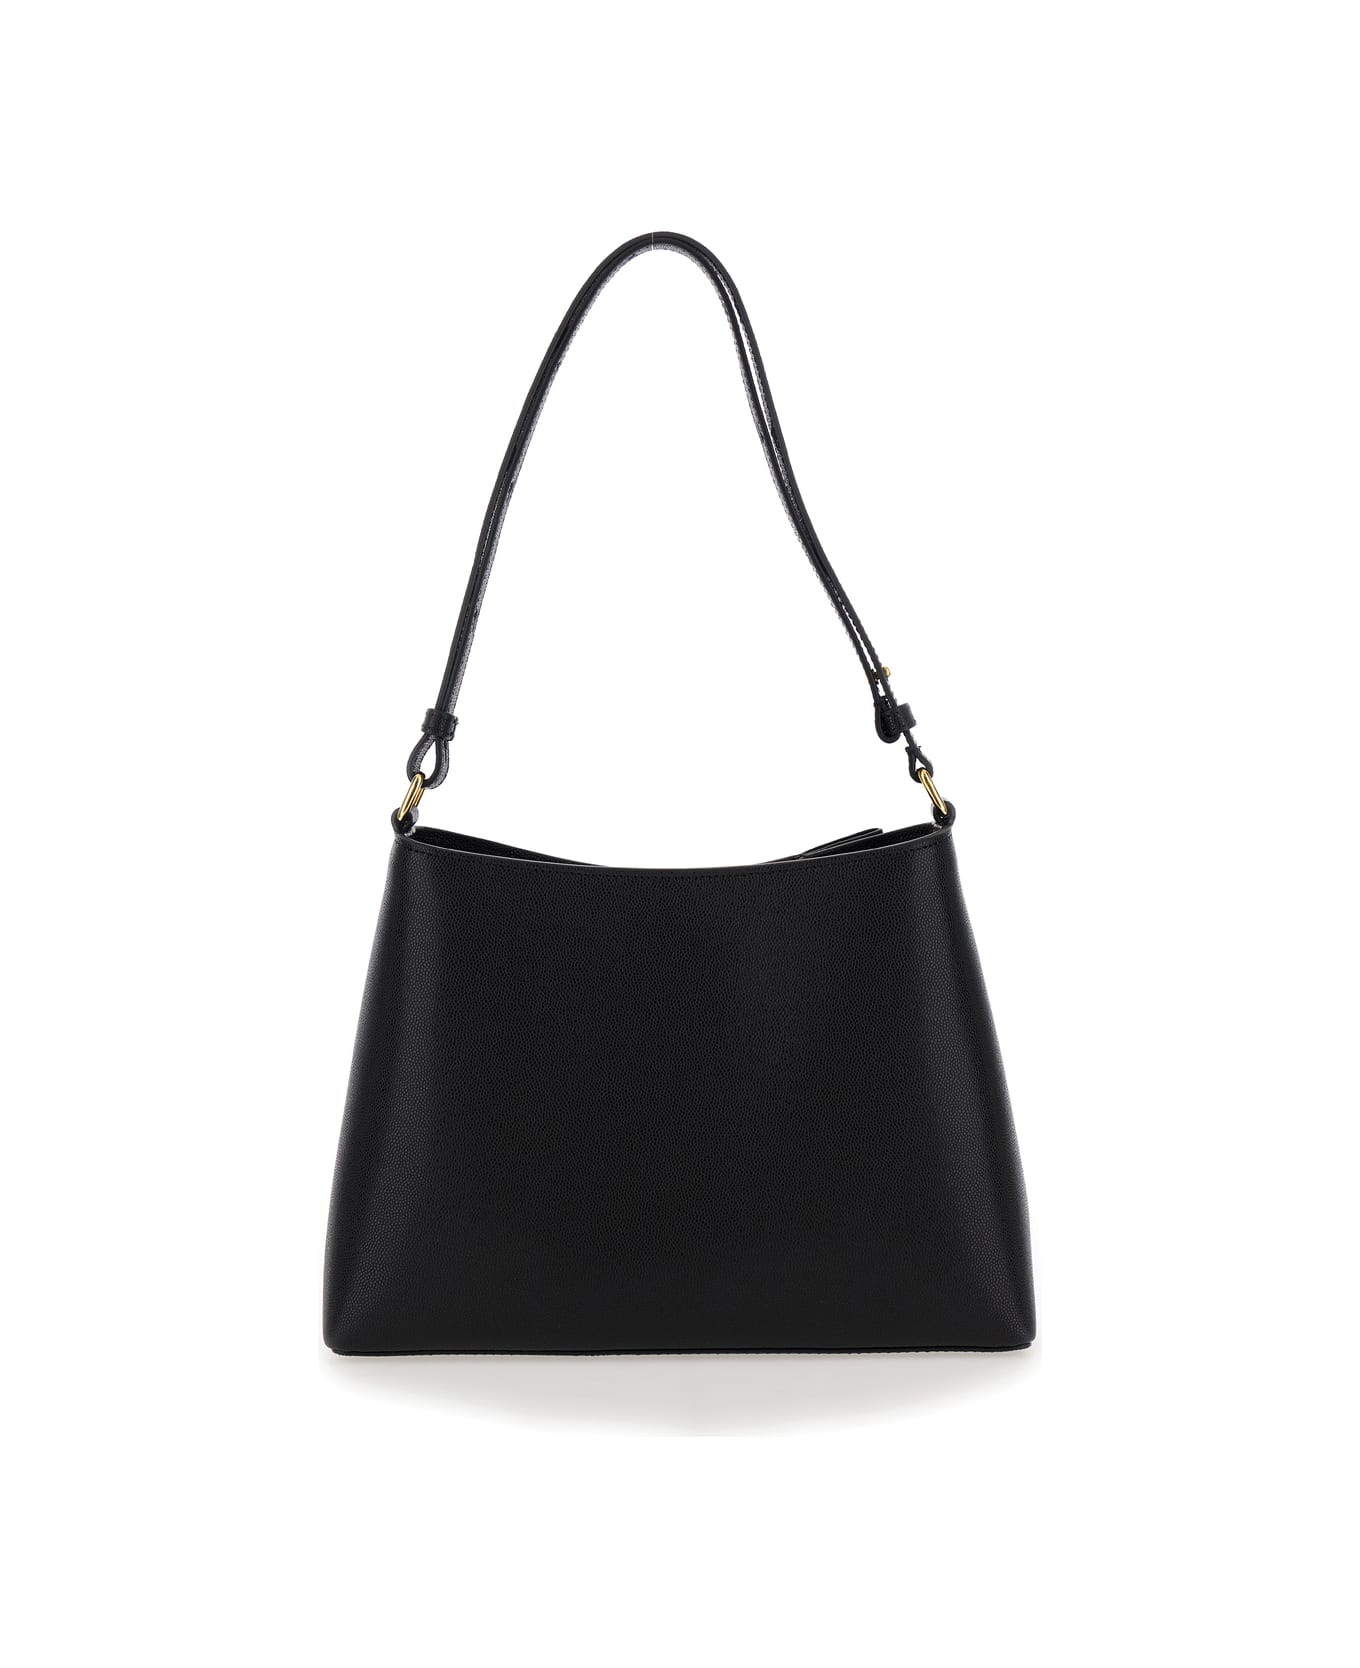 Balmain Black Shoulder Bag With Emblème Motif In Grained Leather Woman - Black